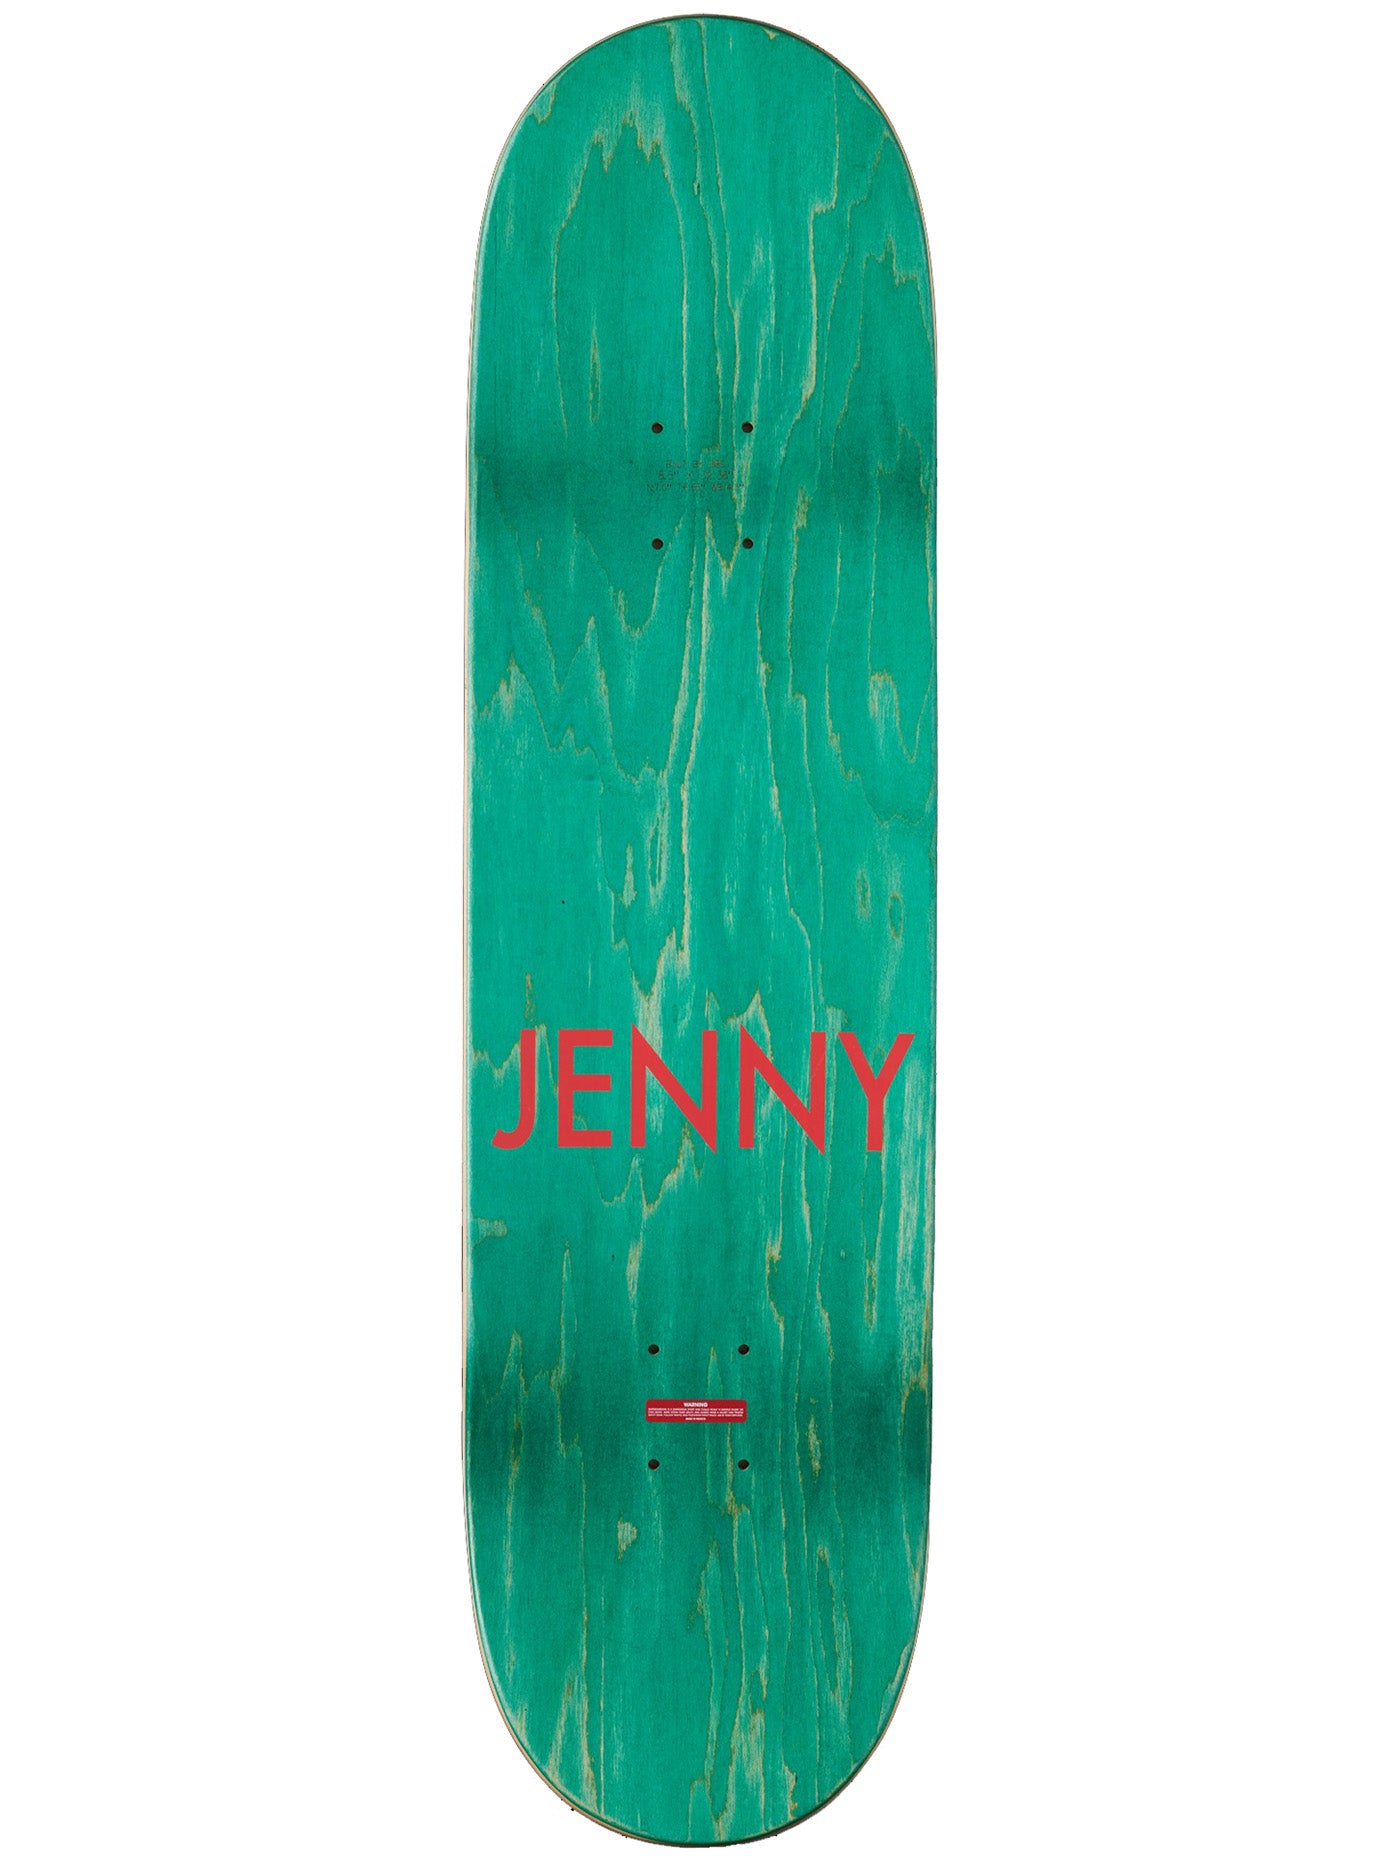 Jenny Mikey Ray Afterlife 8.38" & 8.5" Skateboard Deck